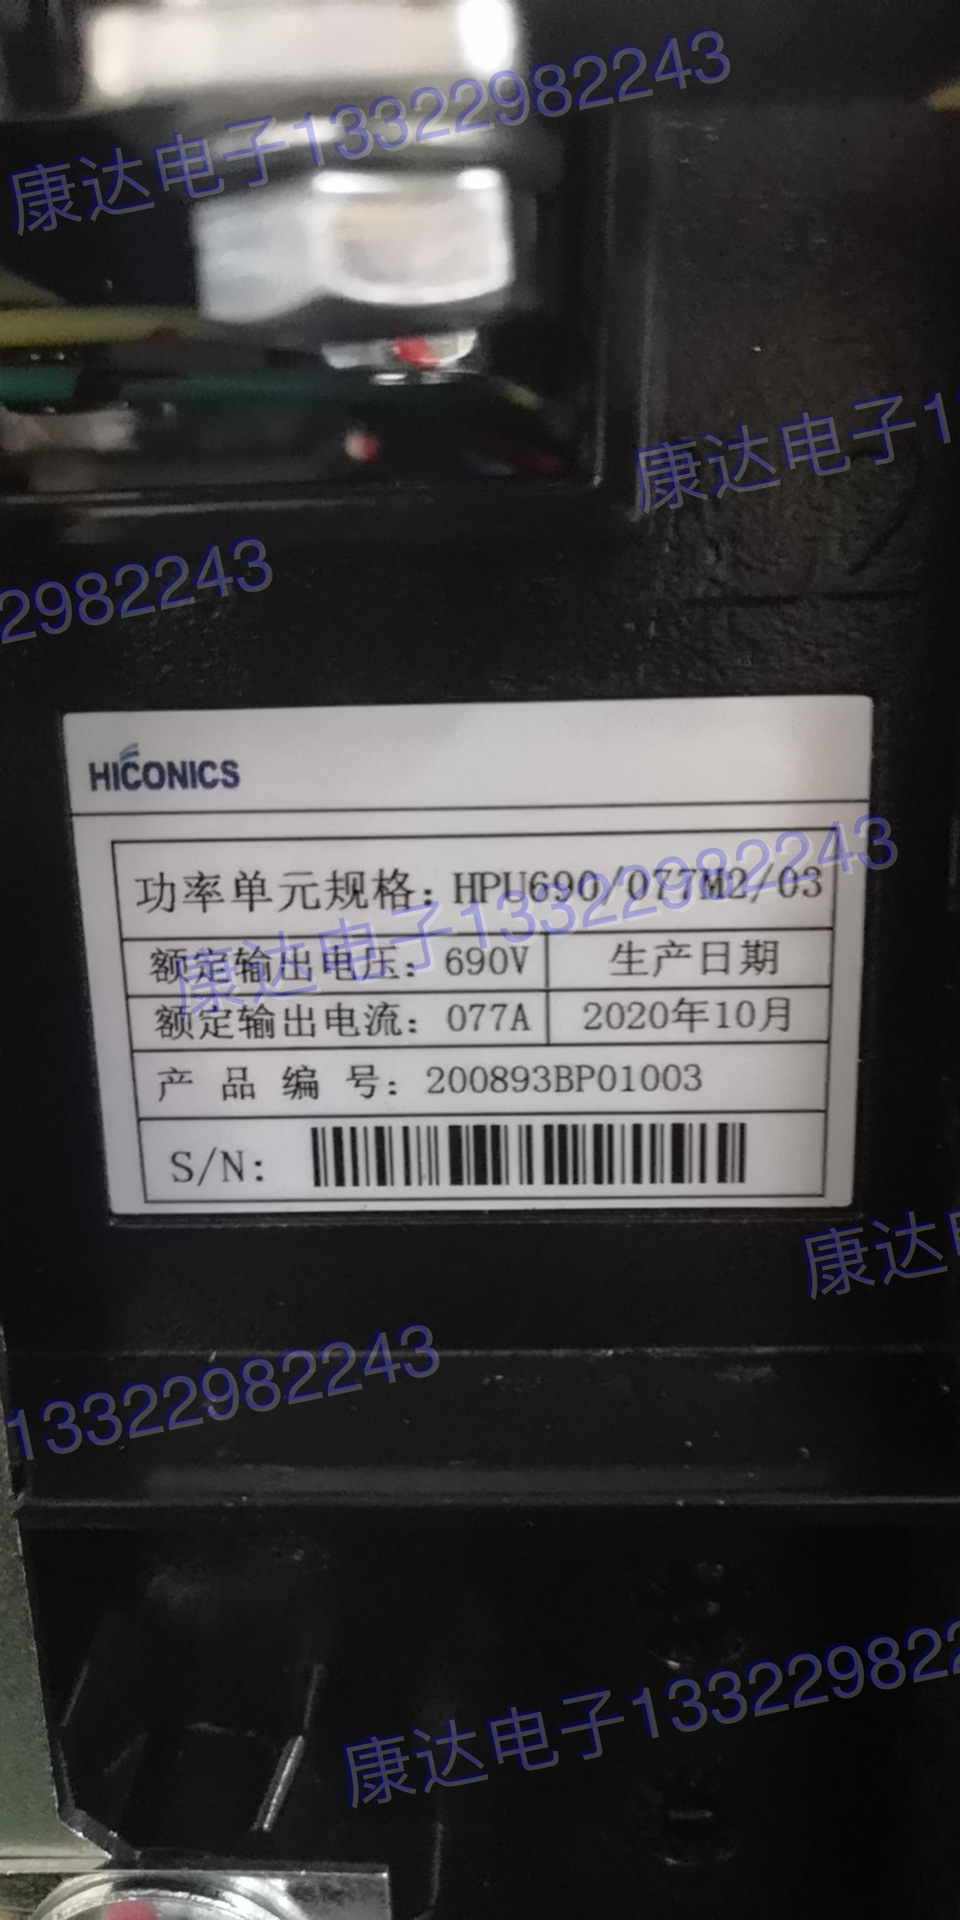 Superiority supply Original Hecom power unit HPU690/077M2/03 , HPU690/192B1 Other specifications